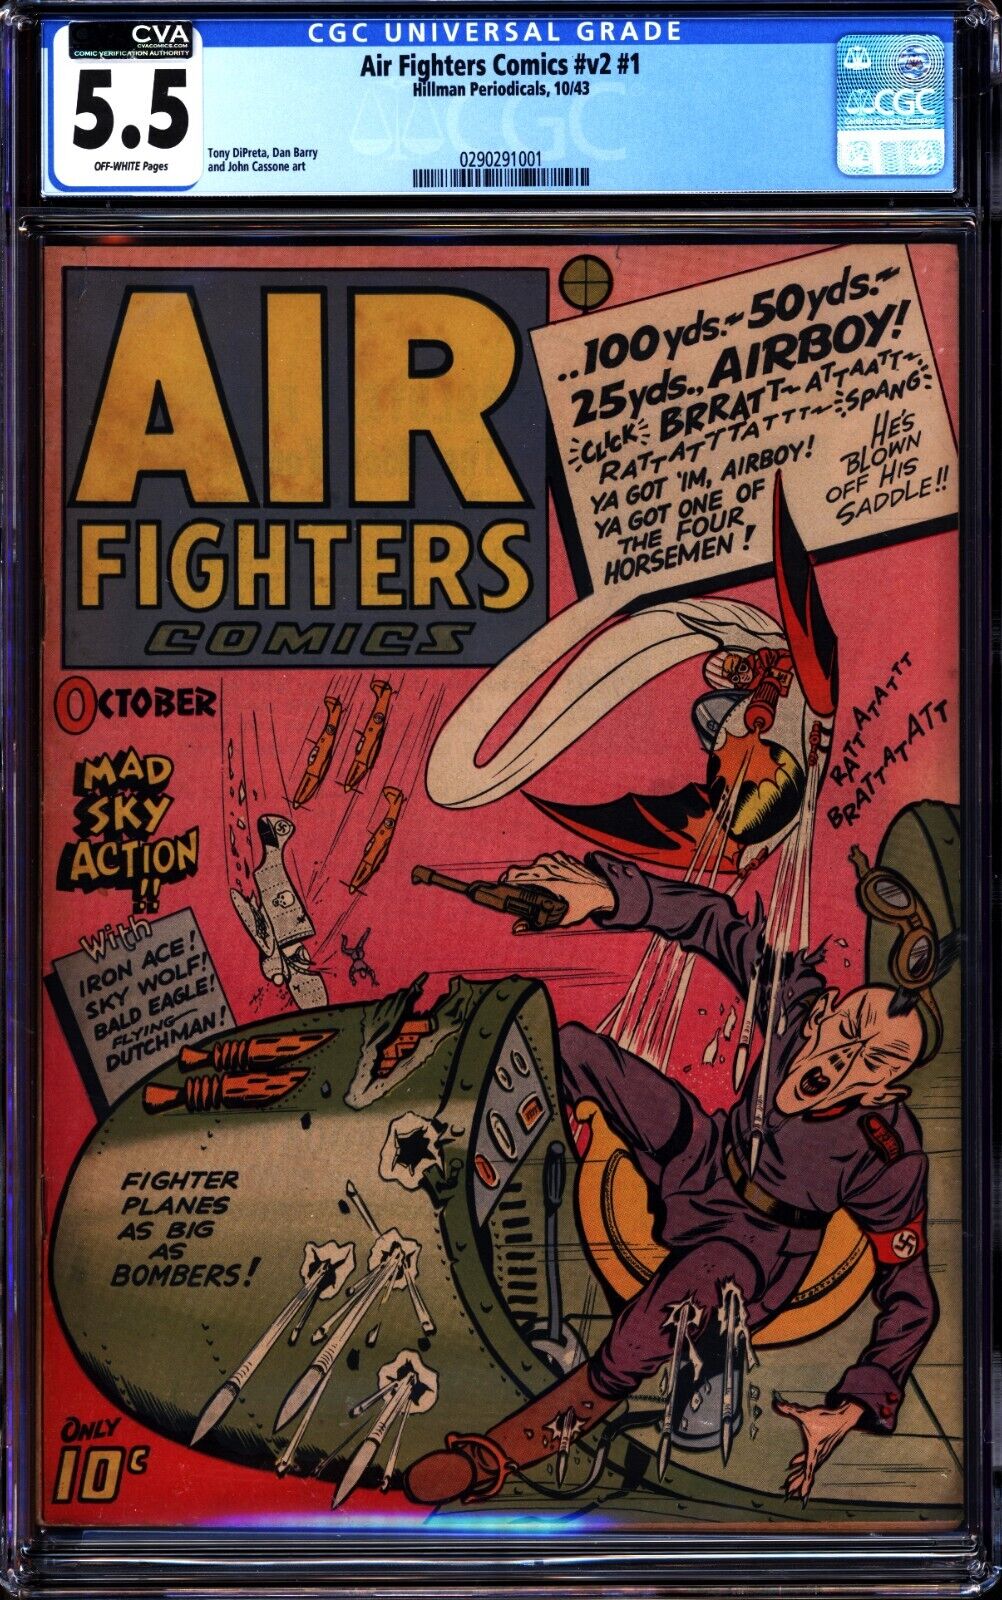 Air Fighters Comics Volume 2 #1 CGC 5.5 CVA Exceptional sticker WWII Nazi 1943